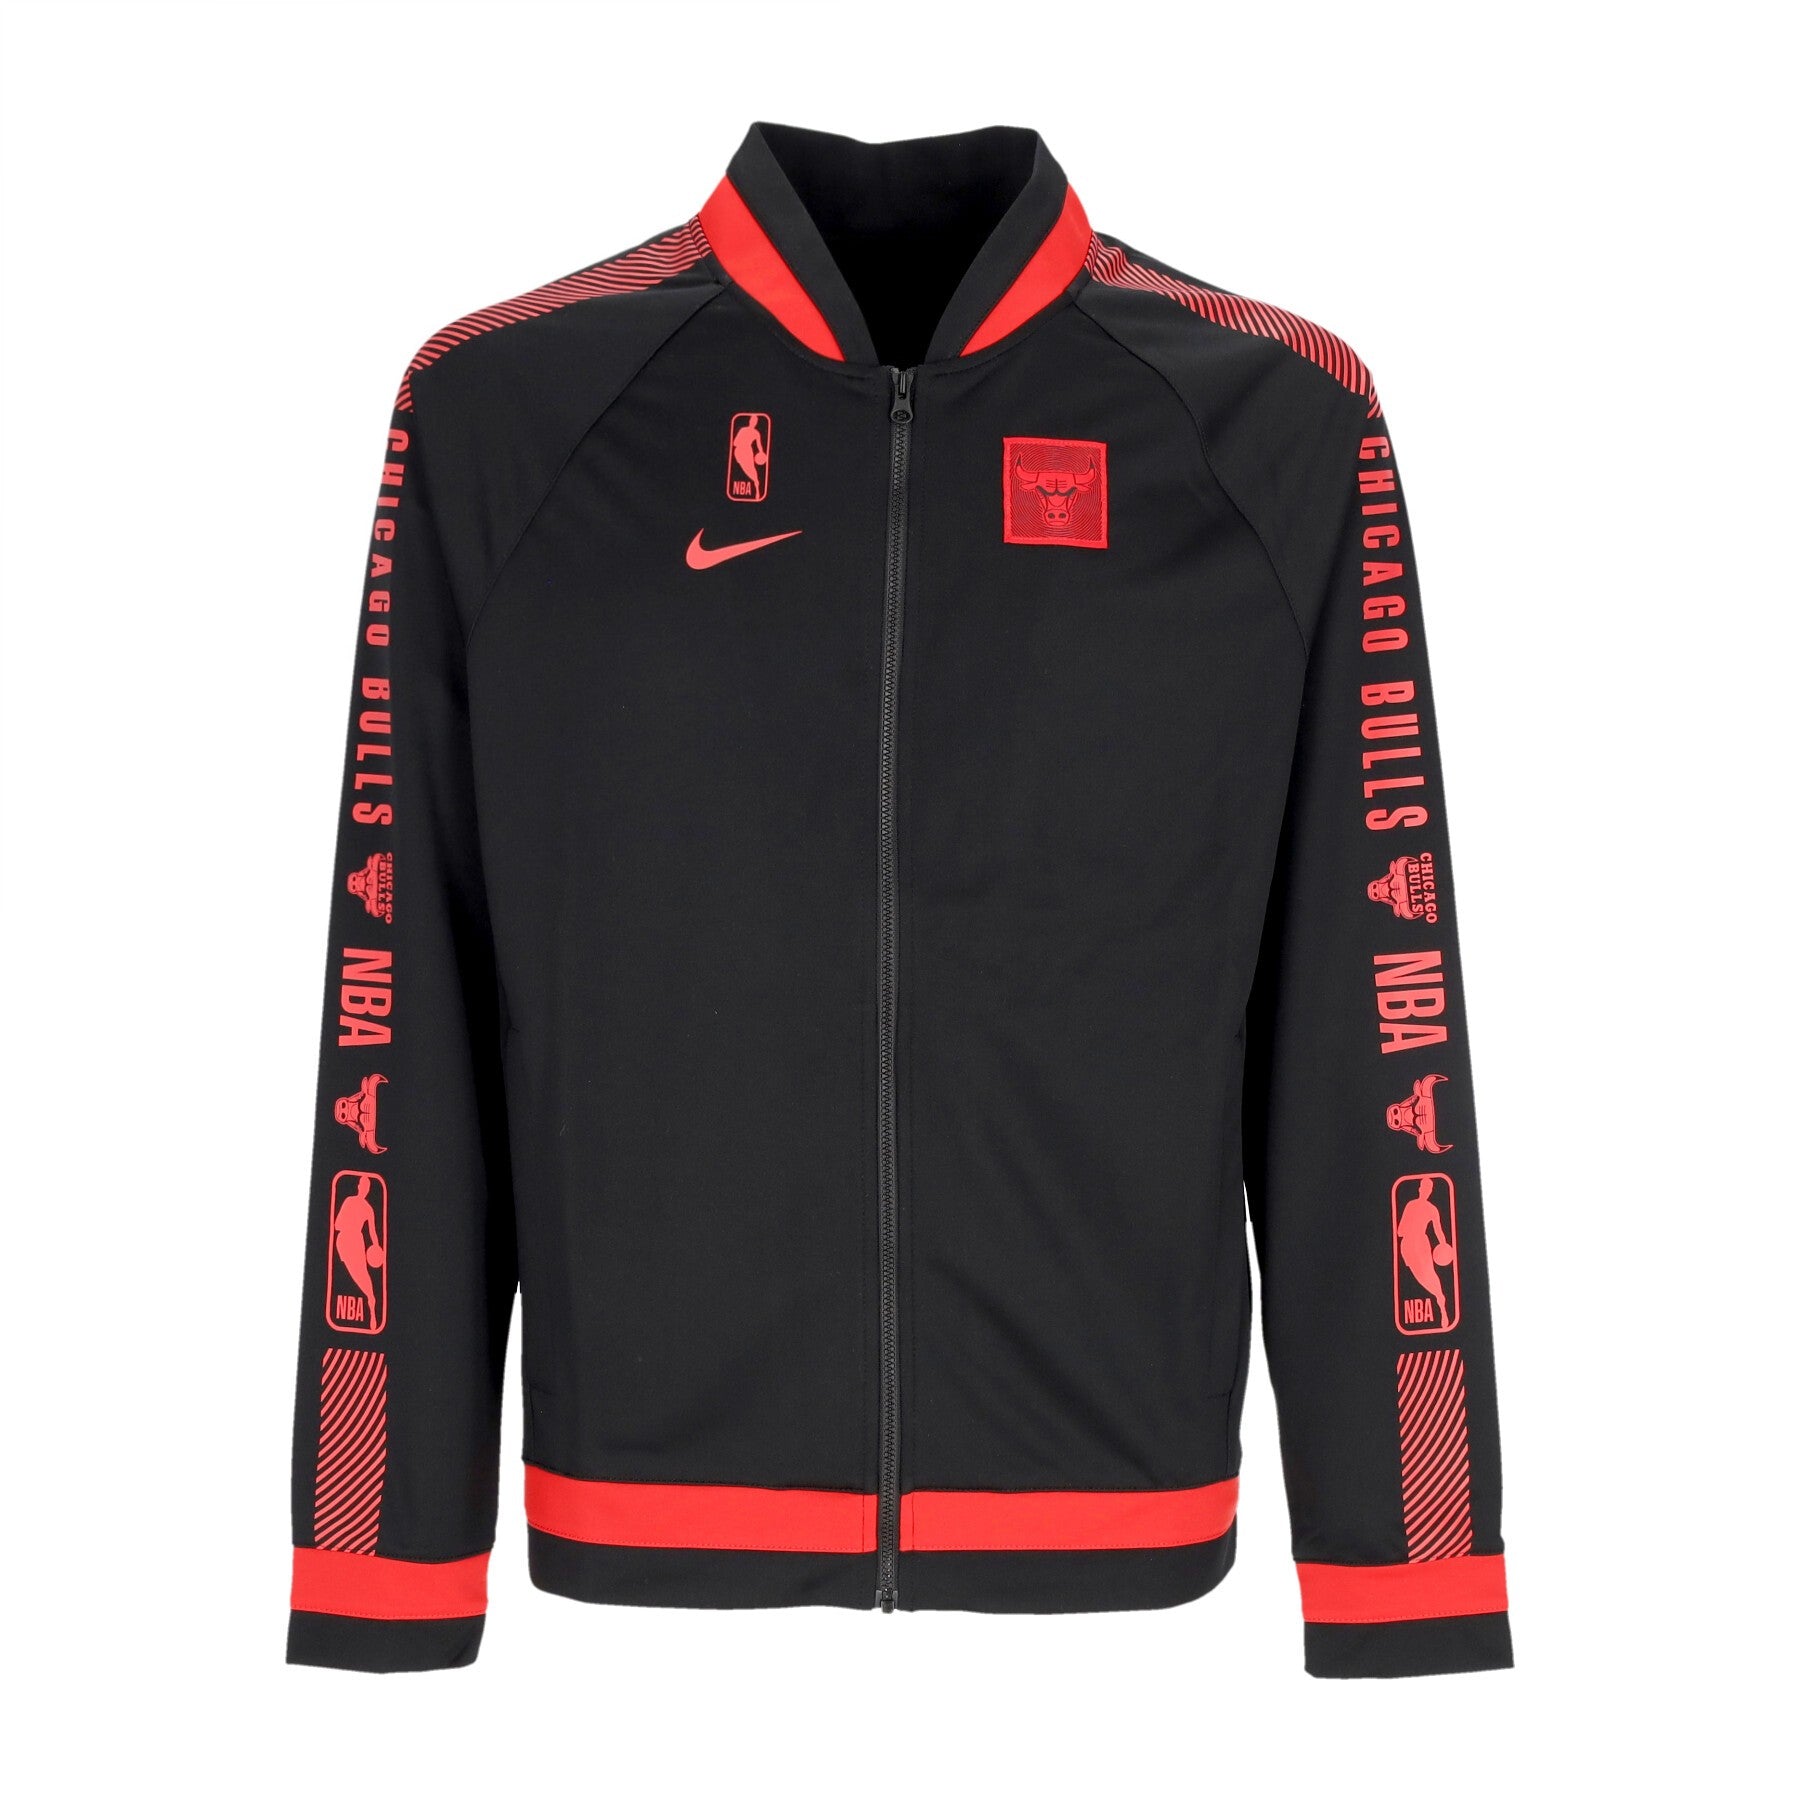 Nike Nba, Giacca Tuta Uomo Nba Courtside Strtfv Dri-fit Jacket Chibul, Black/university Red